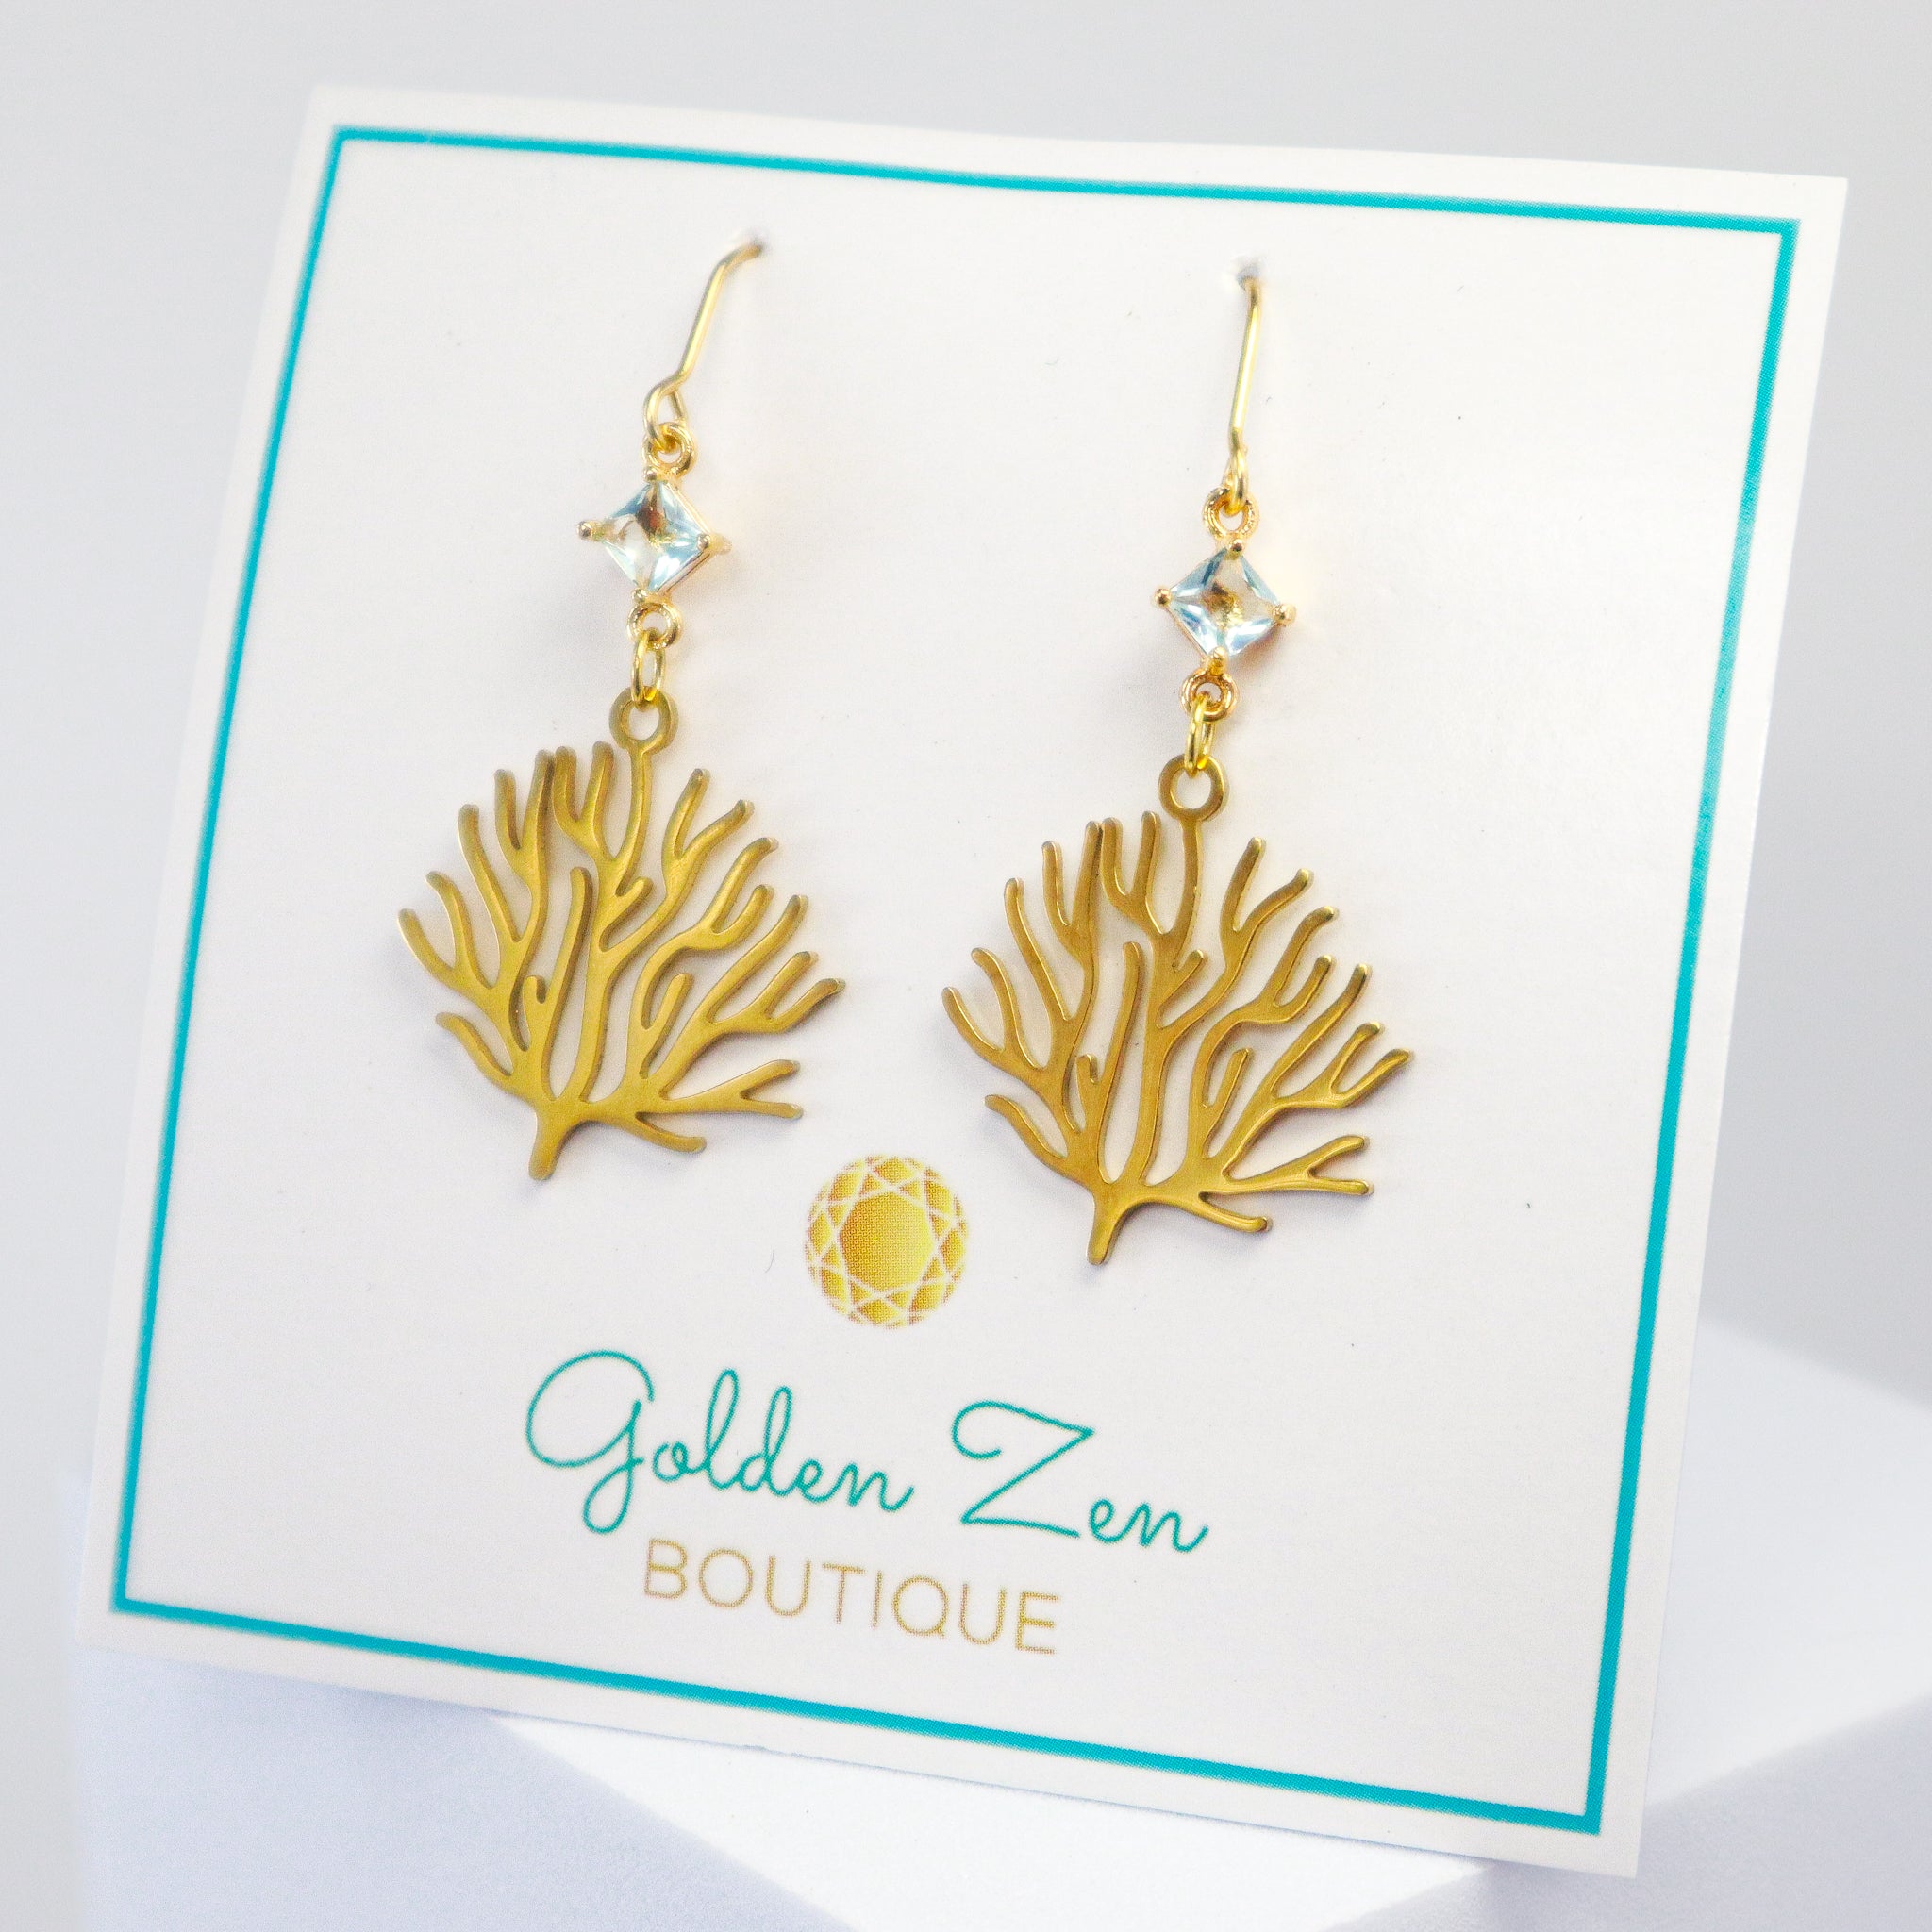 Aqua & Gold Coral Reef Earrings